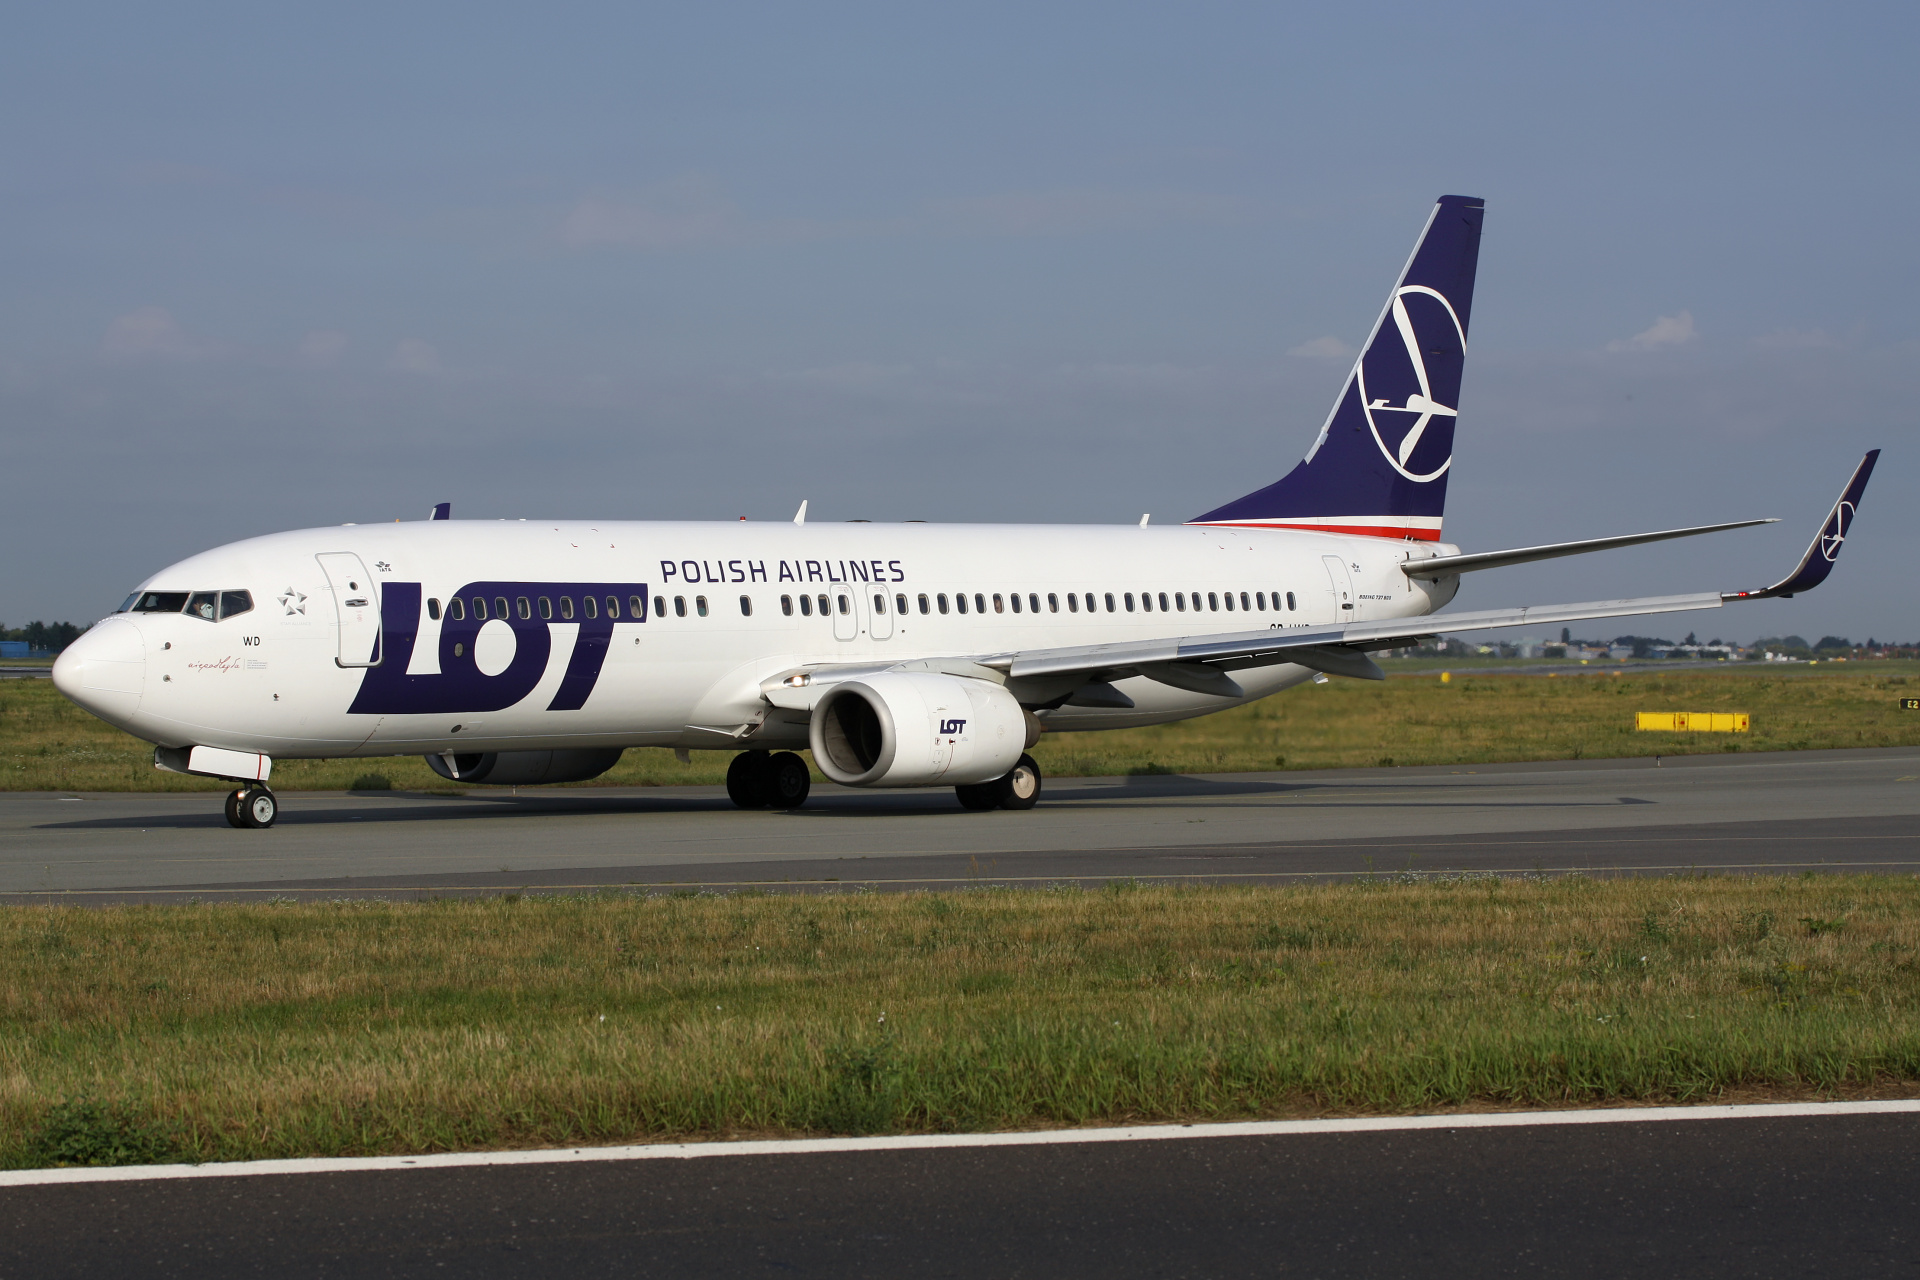 SP-LWD (Niepodległa sticker) (Aircraft » EPWA Spotting » Boeing 737-800 » LOT Polish Airlines)